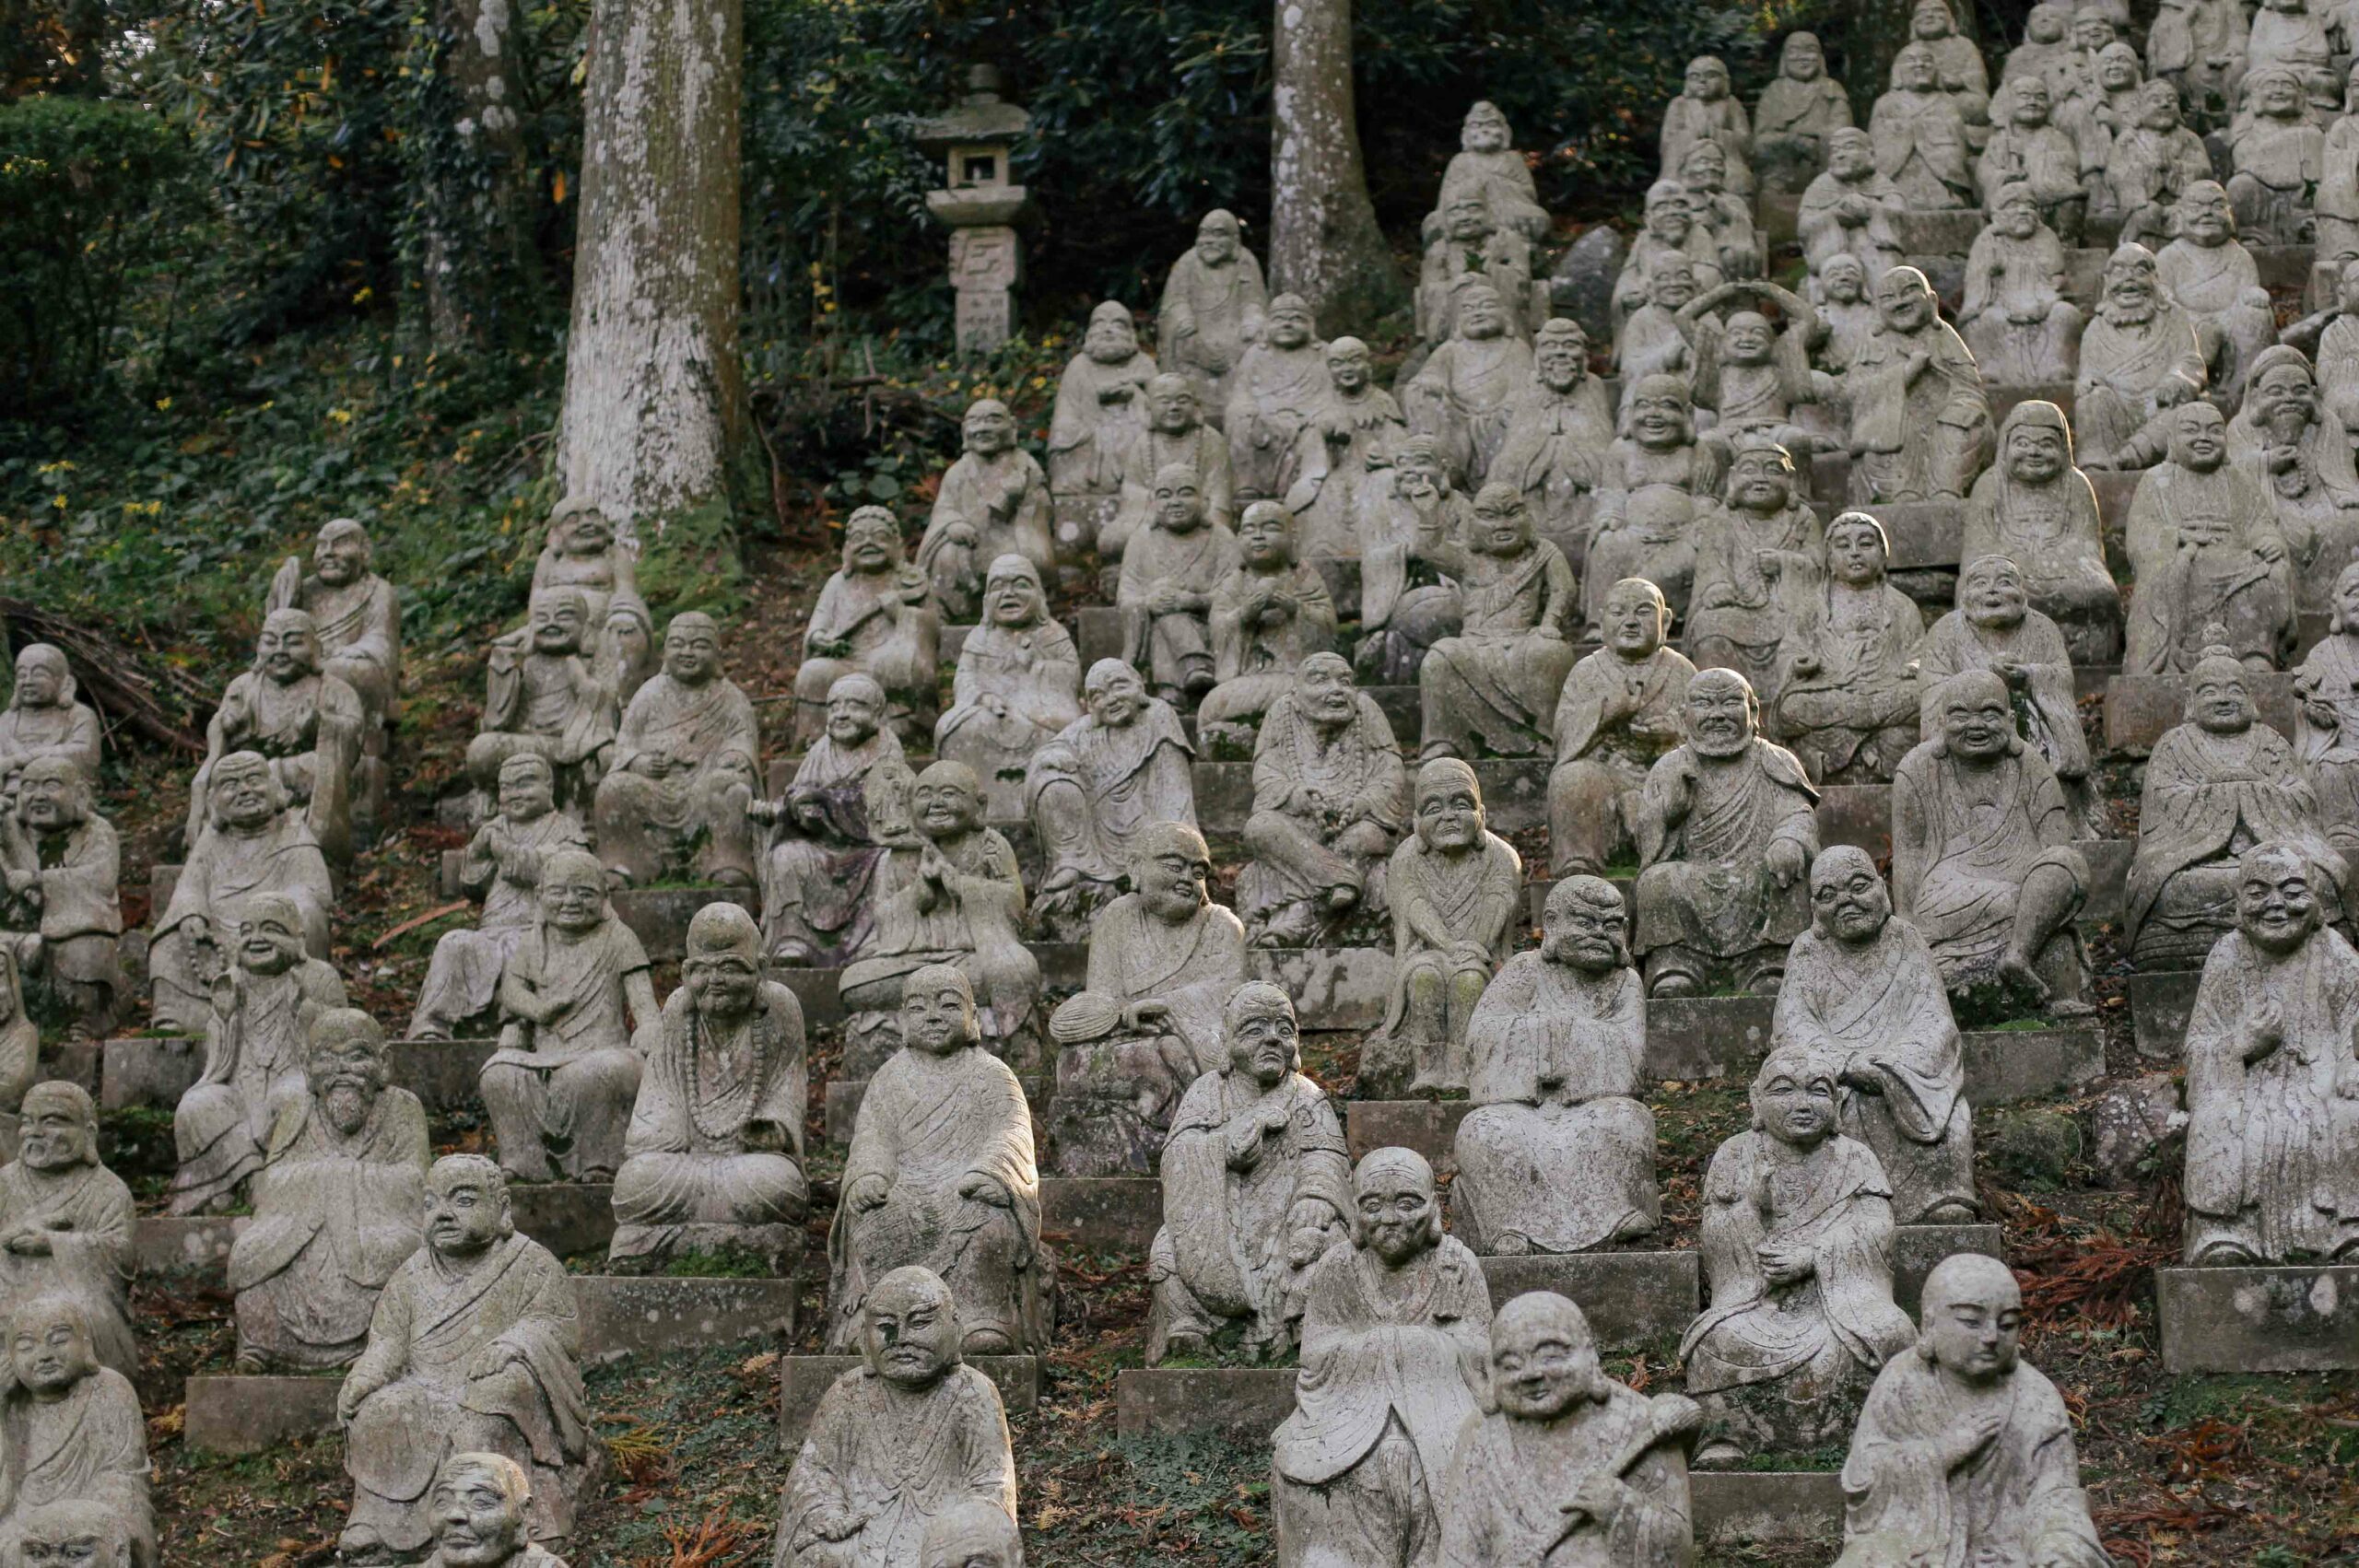 500 Rakan statues on the mountain slopes.